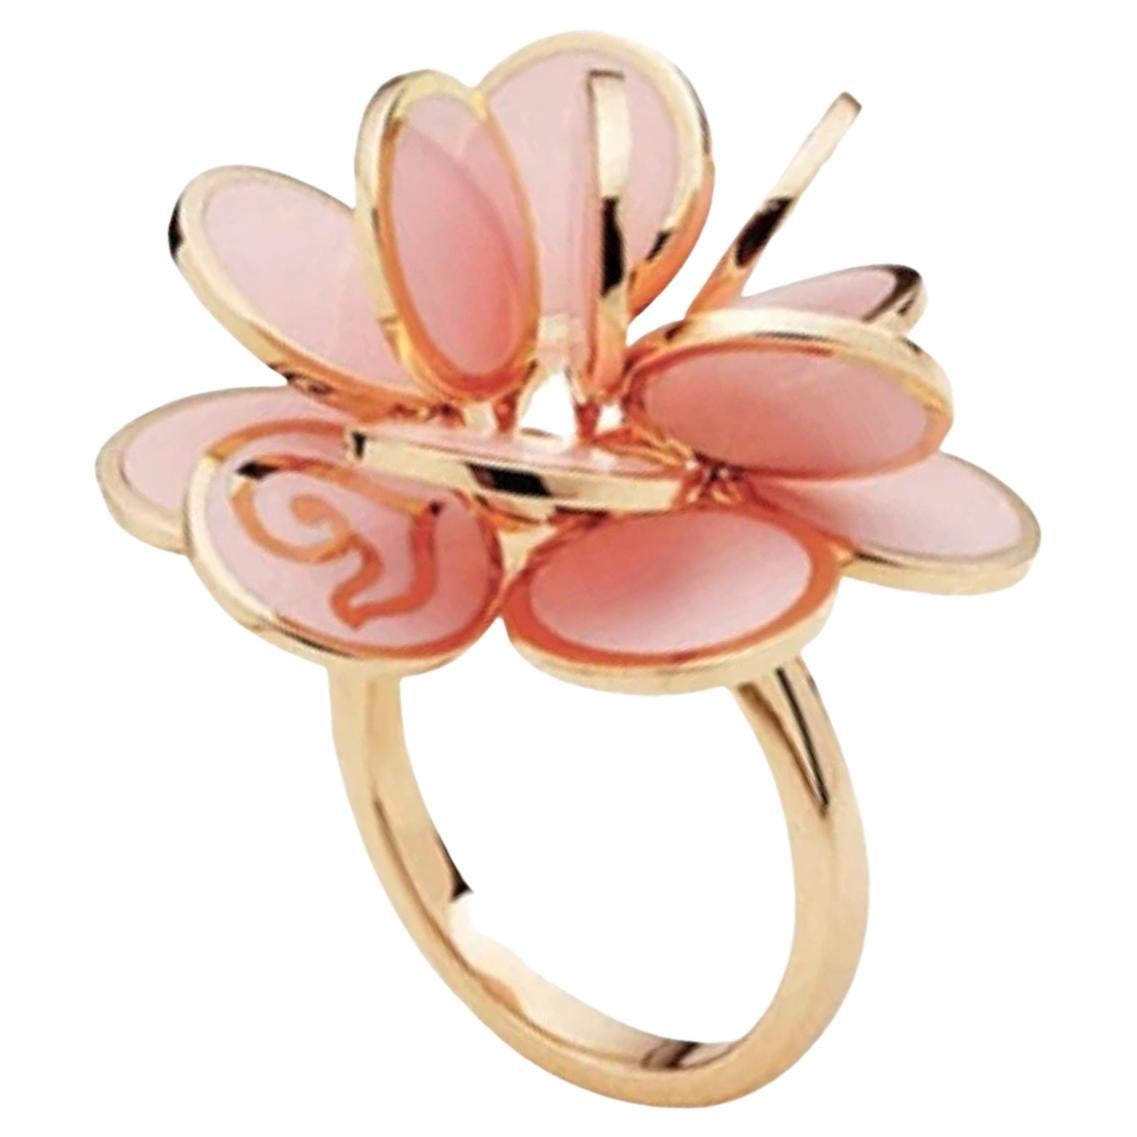 Chantecler 18k Rose Gold Pink Enamel Paillettes Ring